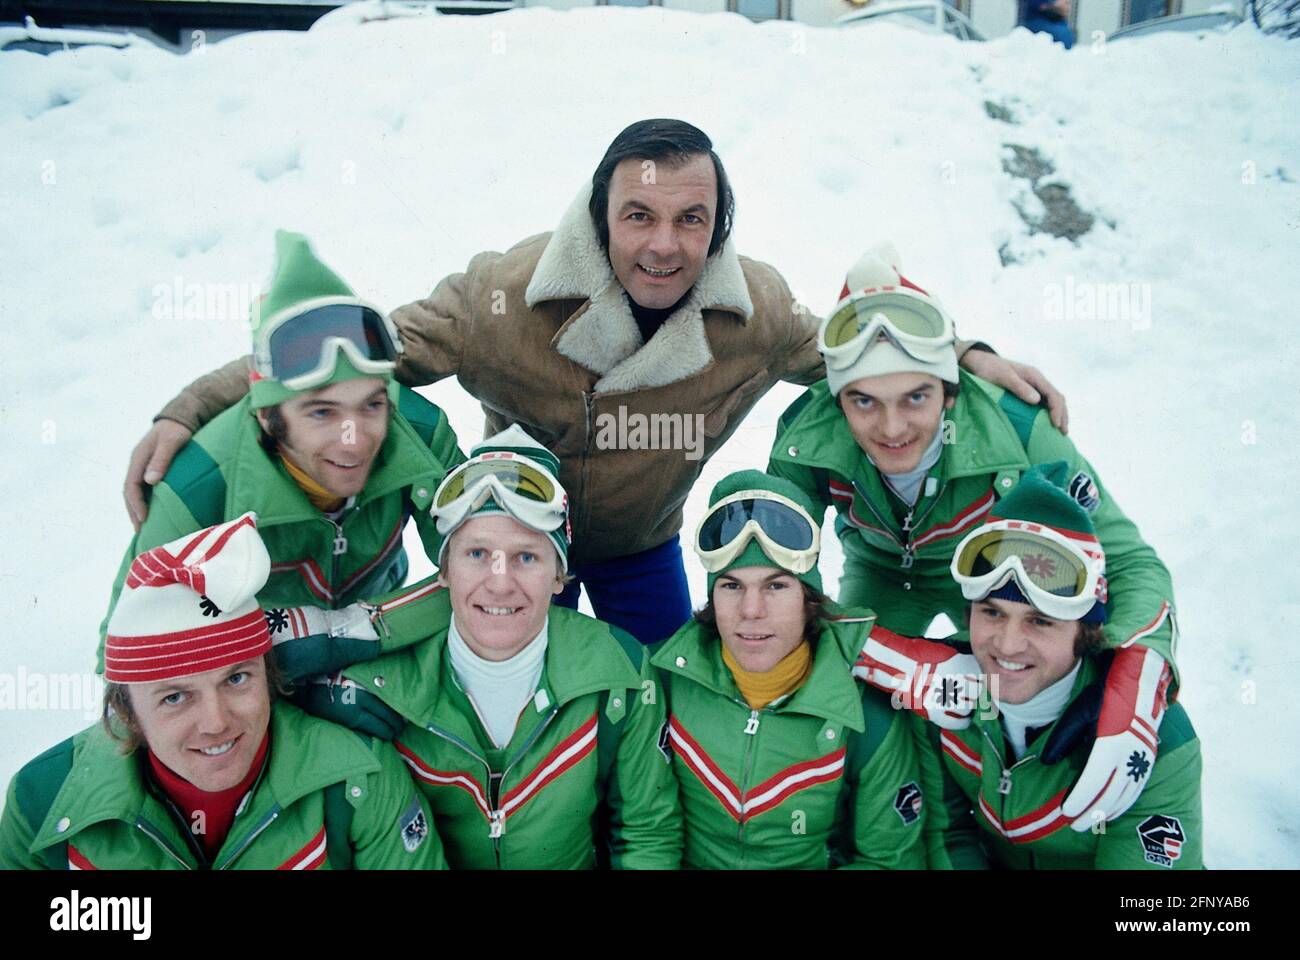 Sailer, Anton Engelbert 'Toni', 17.11.1935 - 24.8.2009, Austrian athlete (Ski Aplin) and actor, ADDITIONAL-RIGHTS-CLEARANCE-INFO-NOT-AVAILABLE Stock Photo